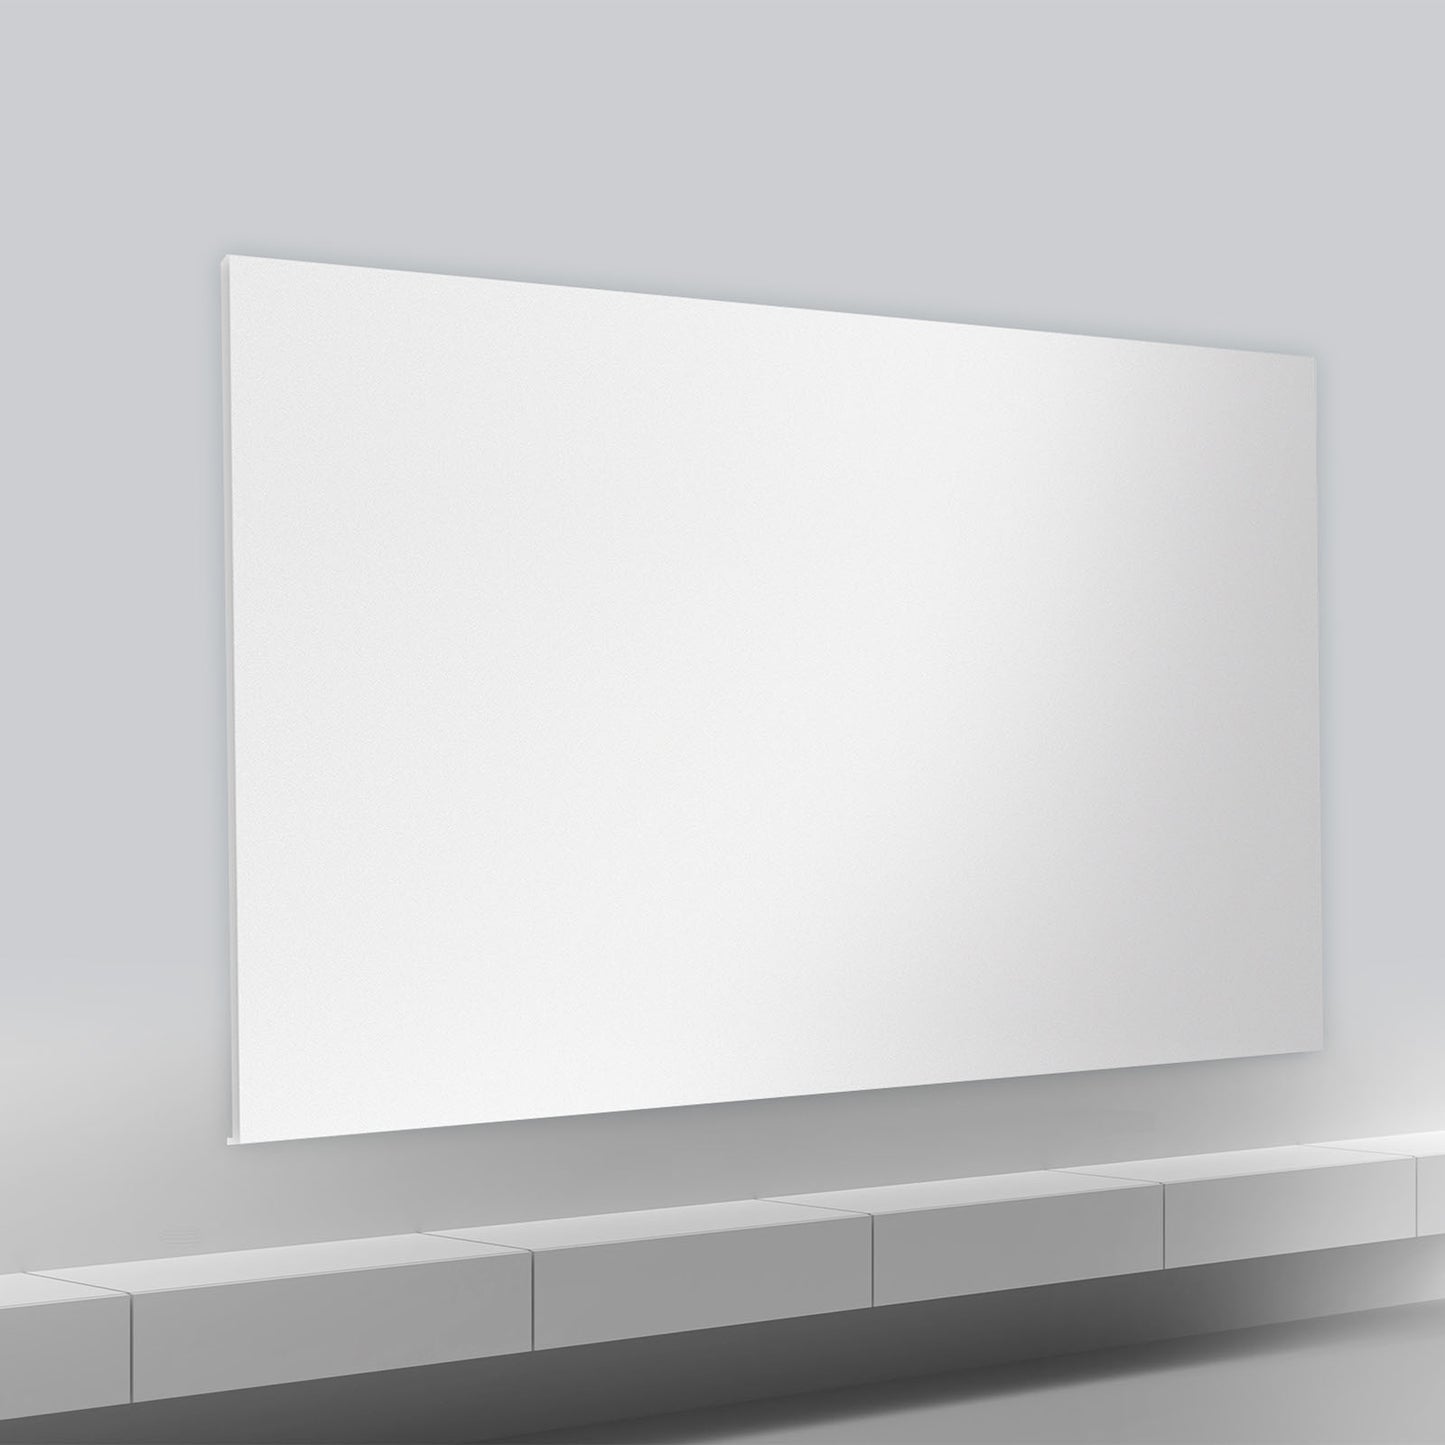 Wanbo HD Anti-Light Curtain Pro portable and foldable